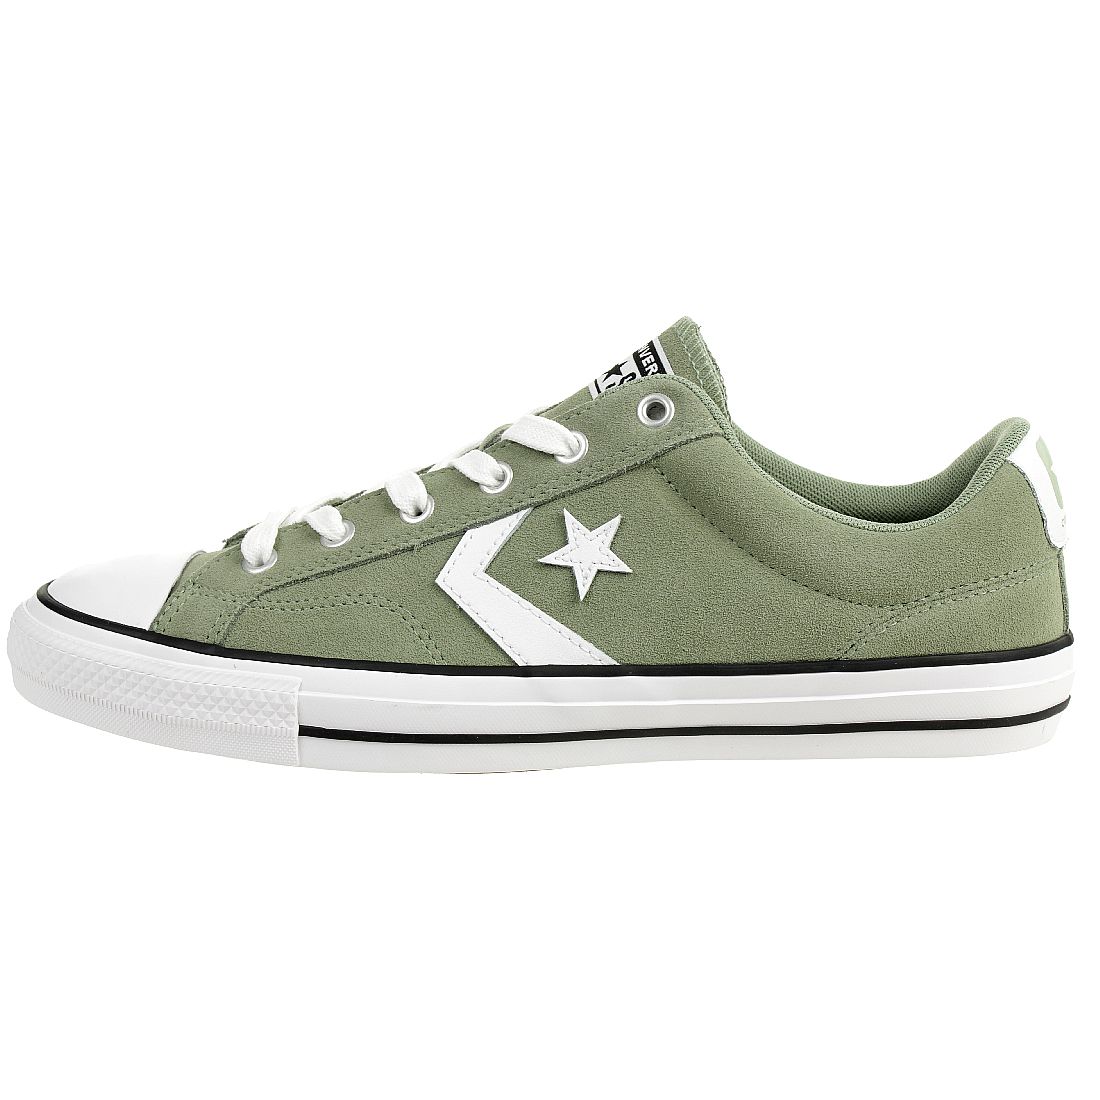 Converse STAR PLAYER OX Schuhe Sneaker Wildleder Olive 165463C